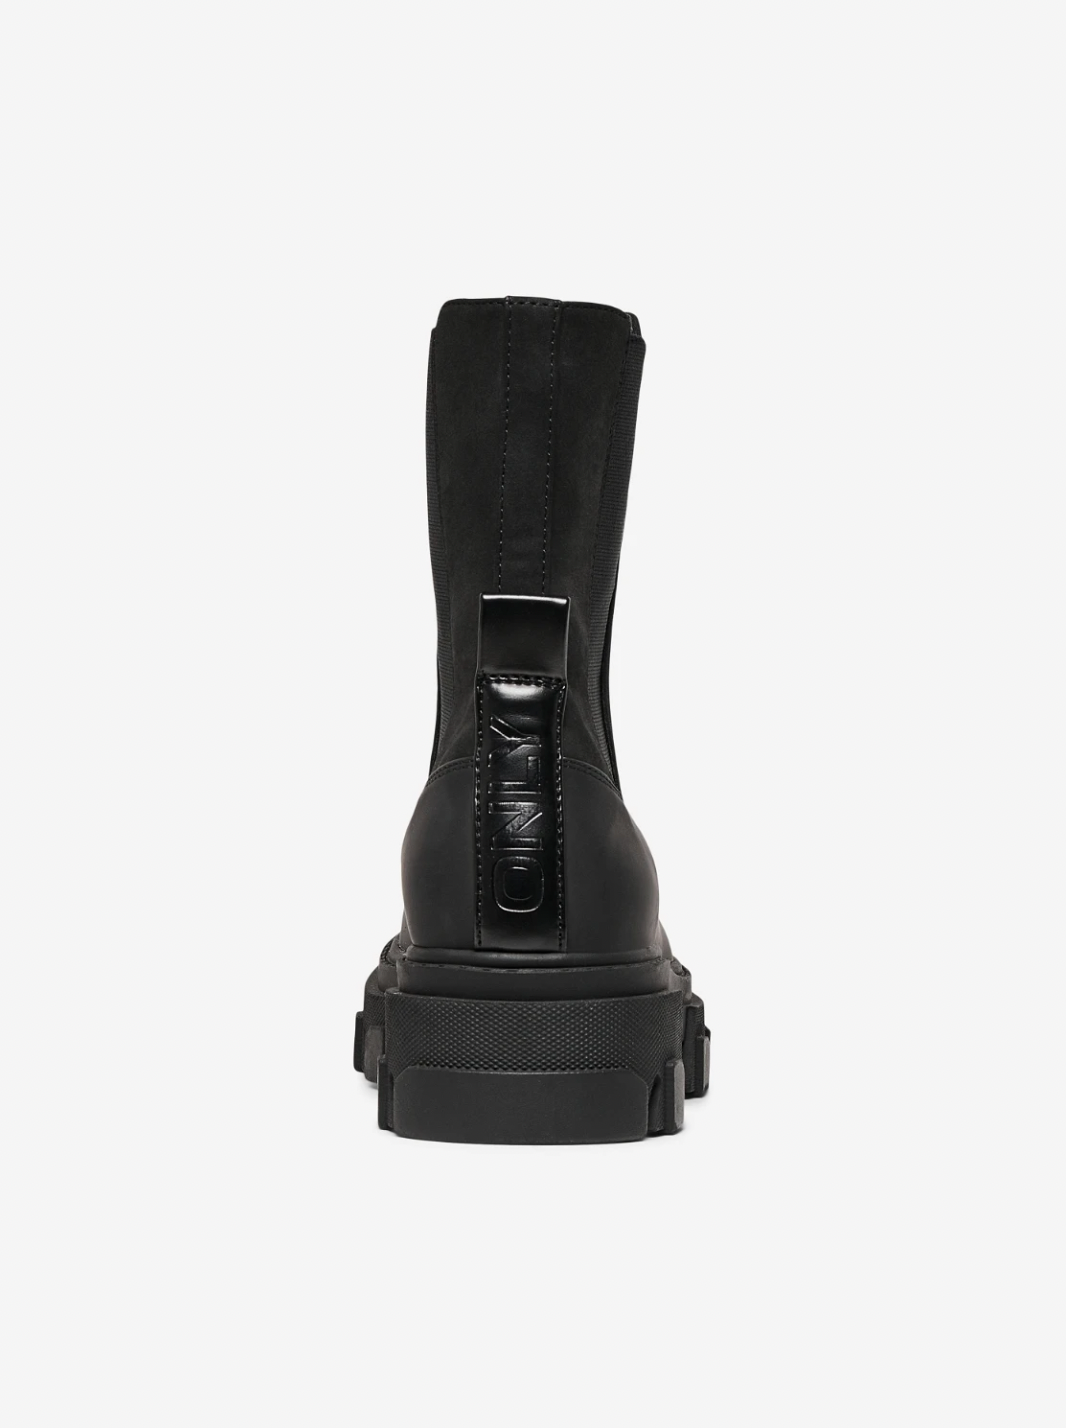 TOLA-1 Black Nubuck Partial Rubber Boots in Black